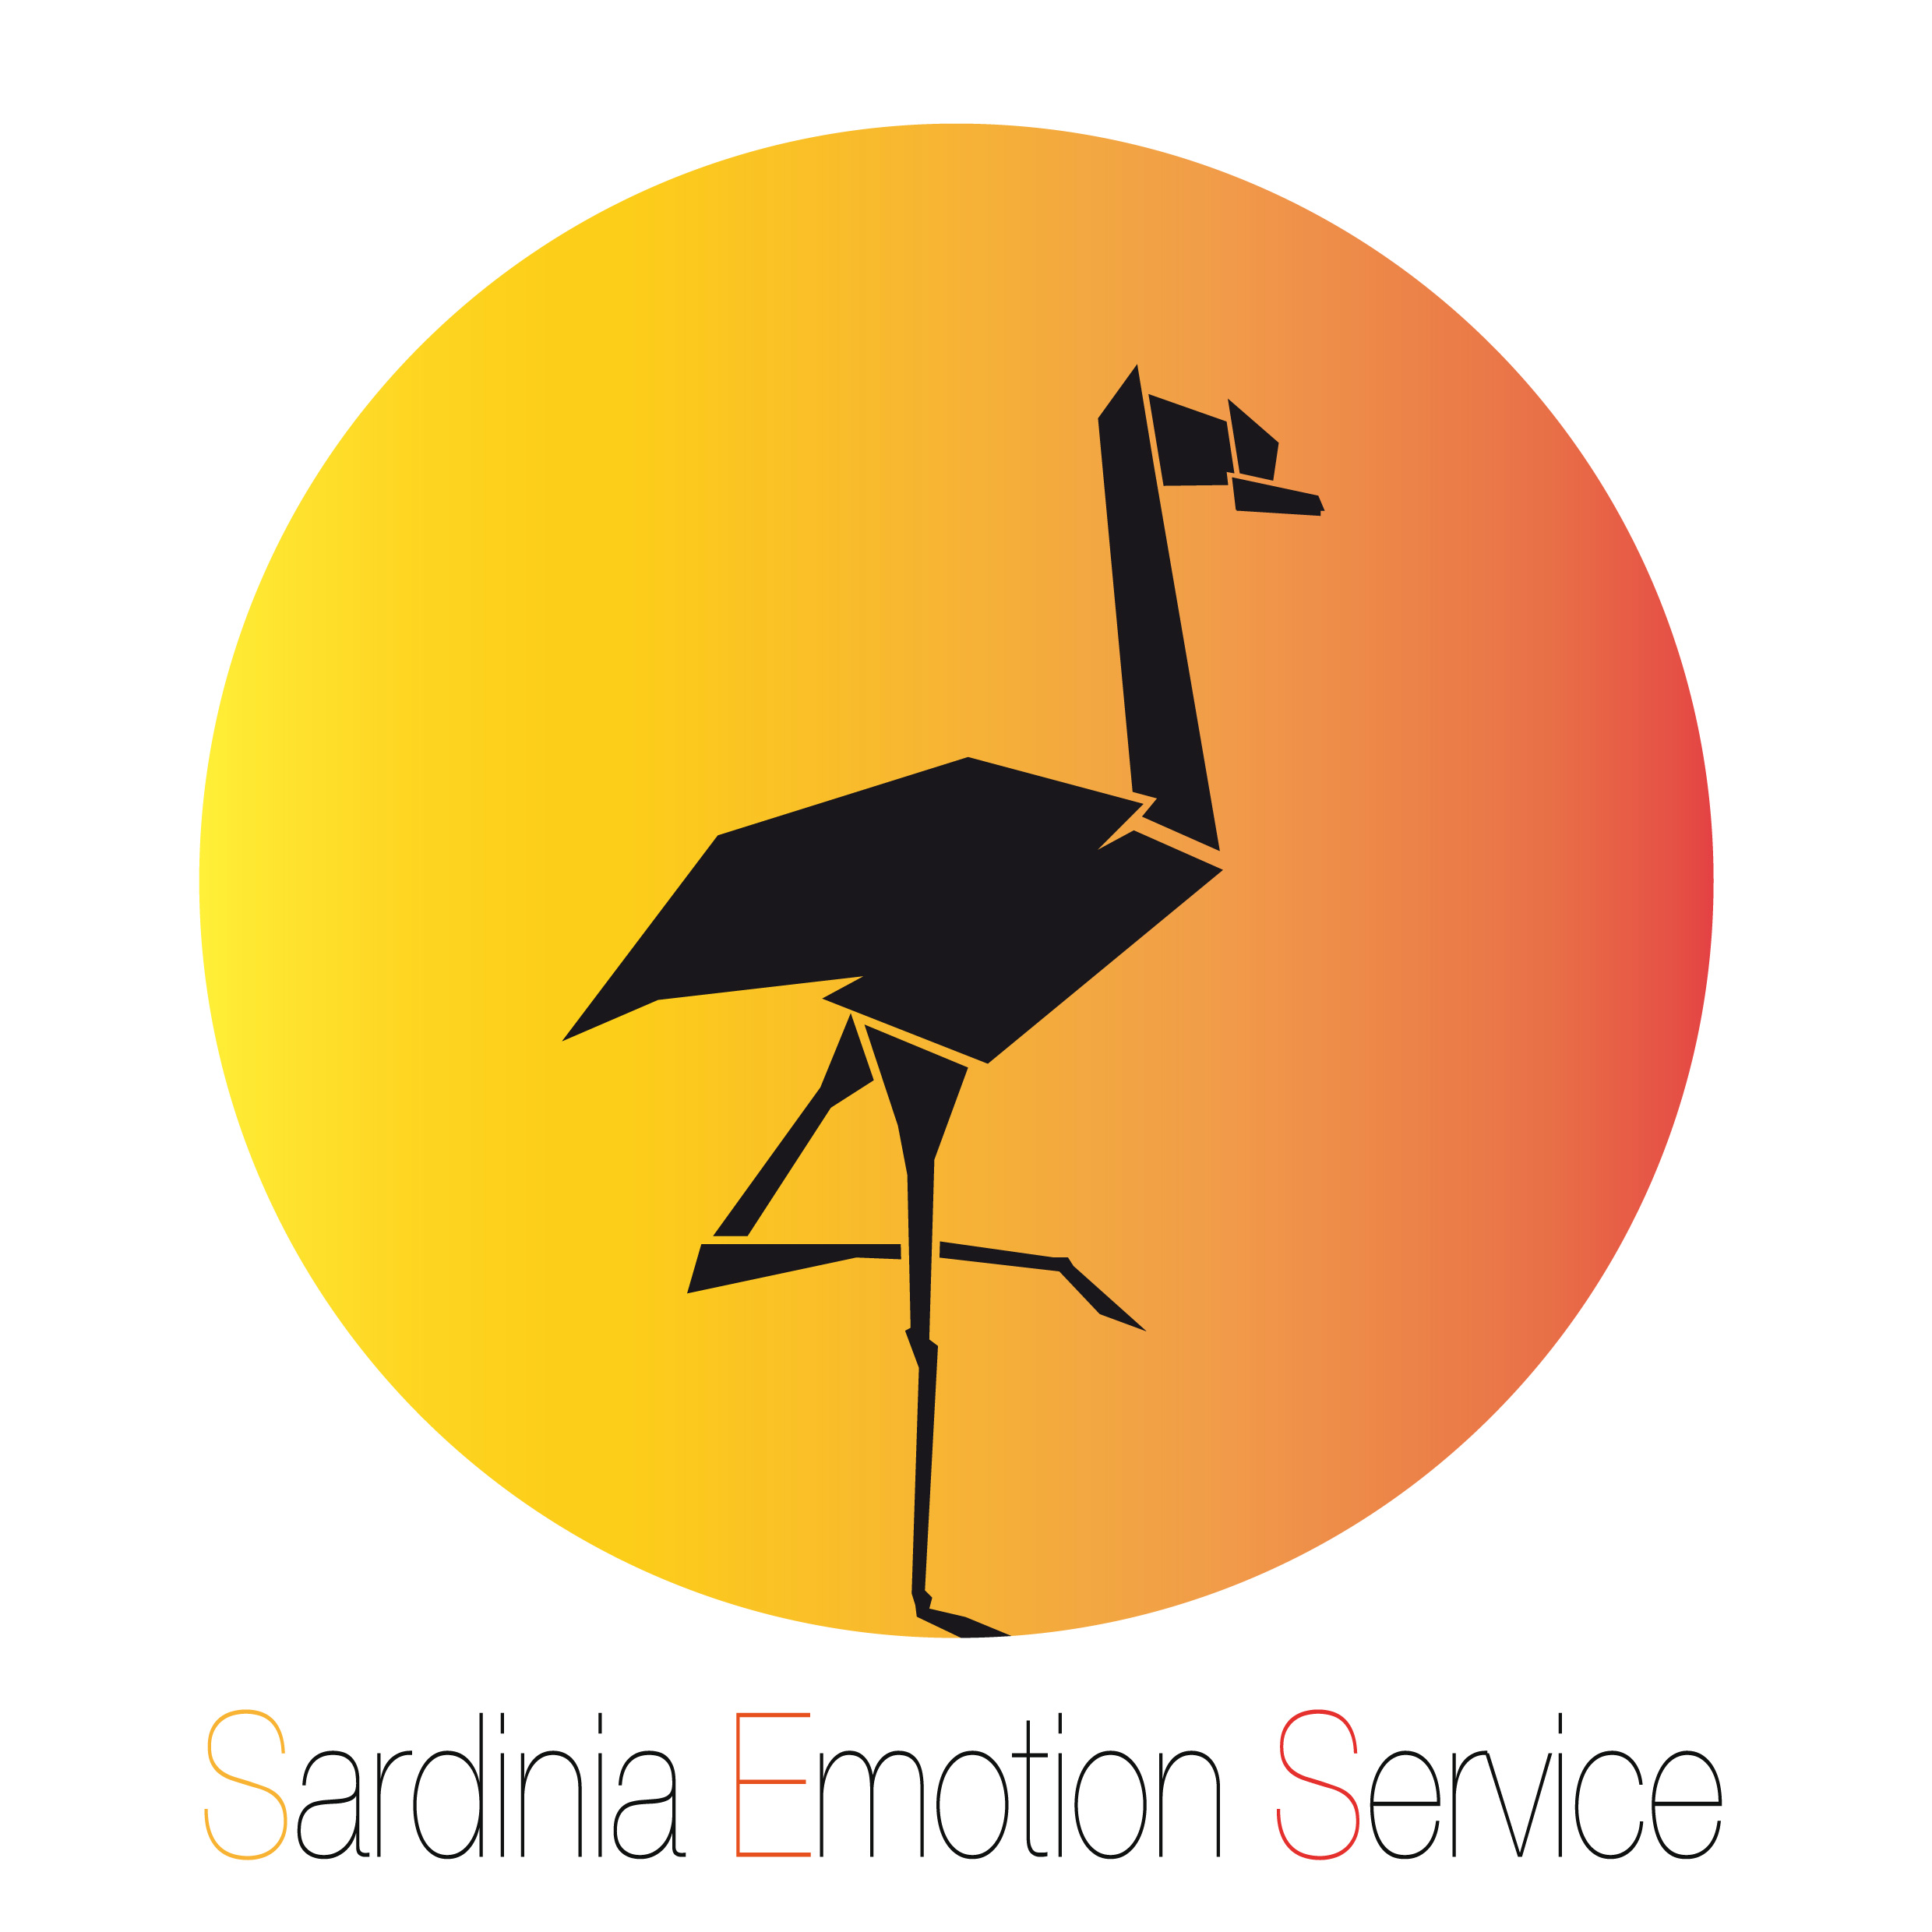 sardinia-emotion-service-logo-01